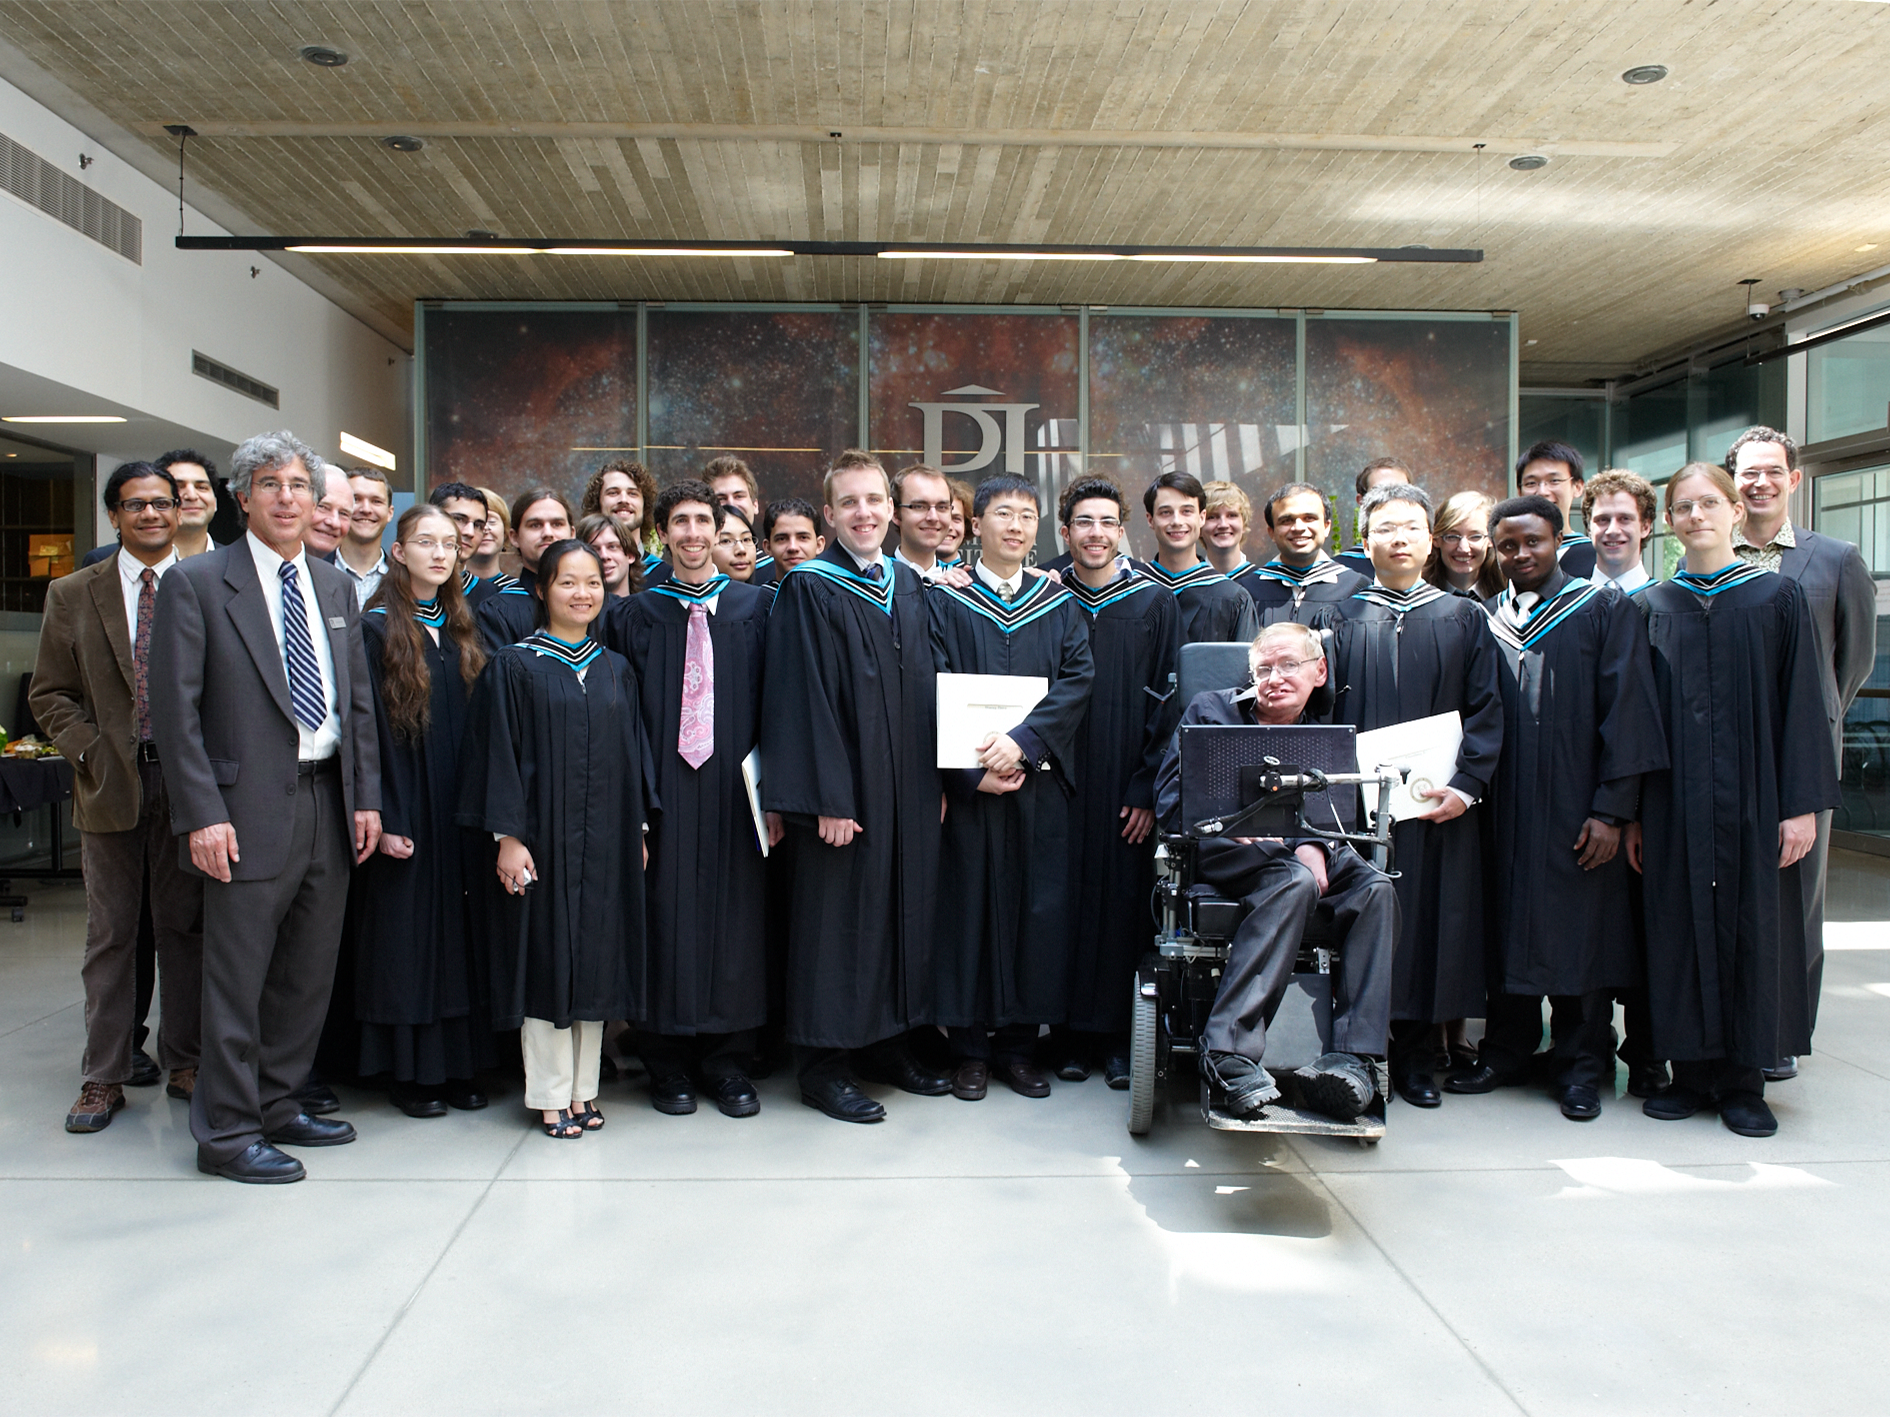 Perimeter Scholars International PSI convocation with Stephen Hawking 2010